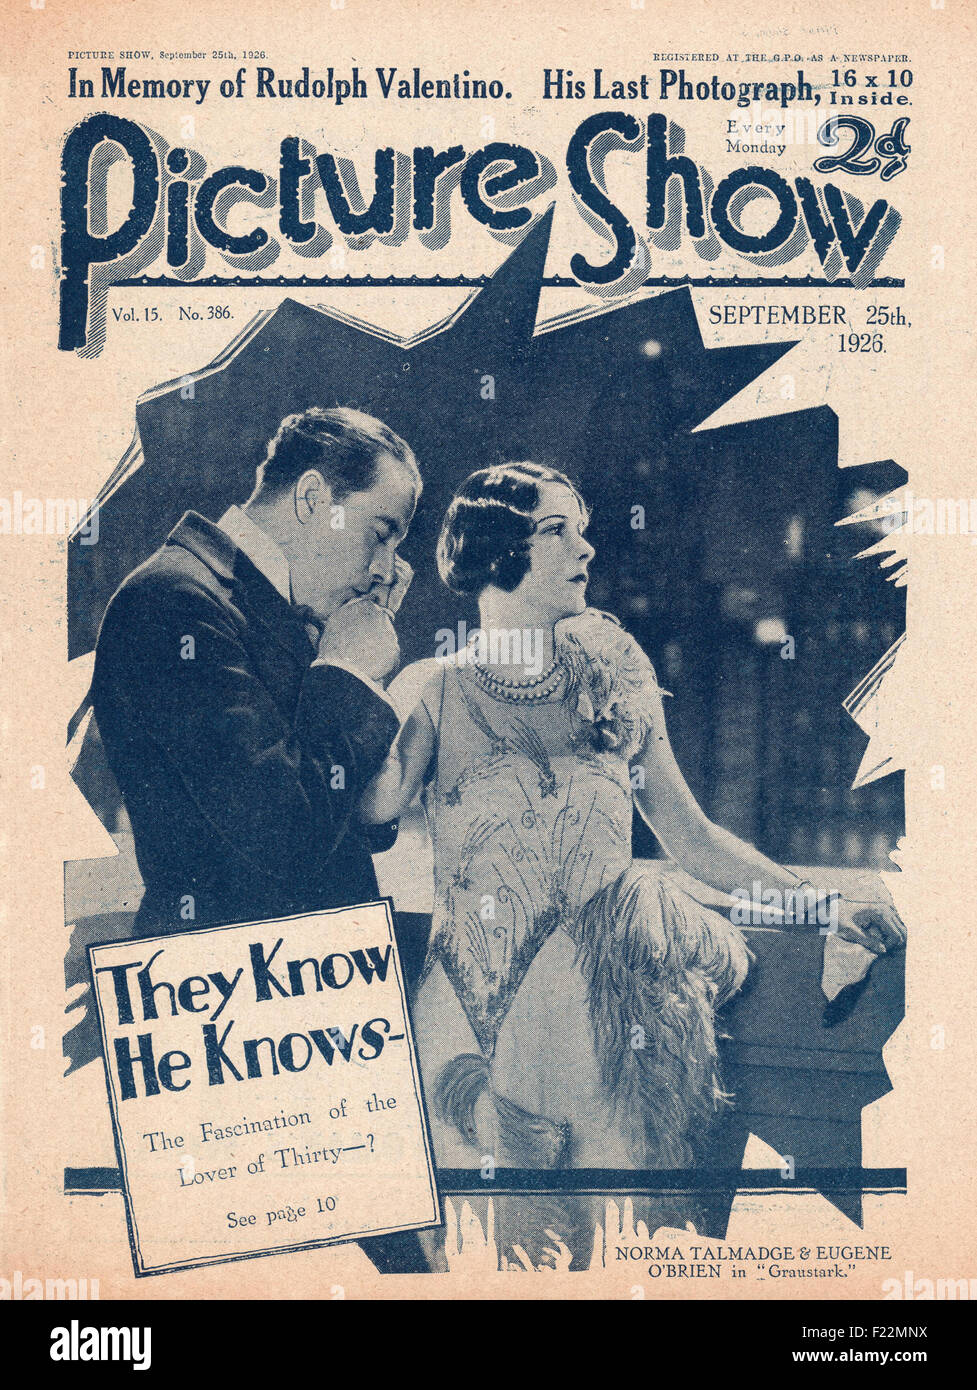 1926 Picture Show Norma Talmadge & Eugene O'Brien Stock Photo